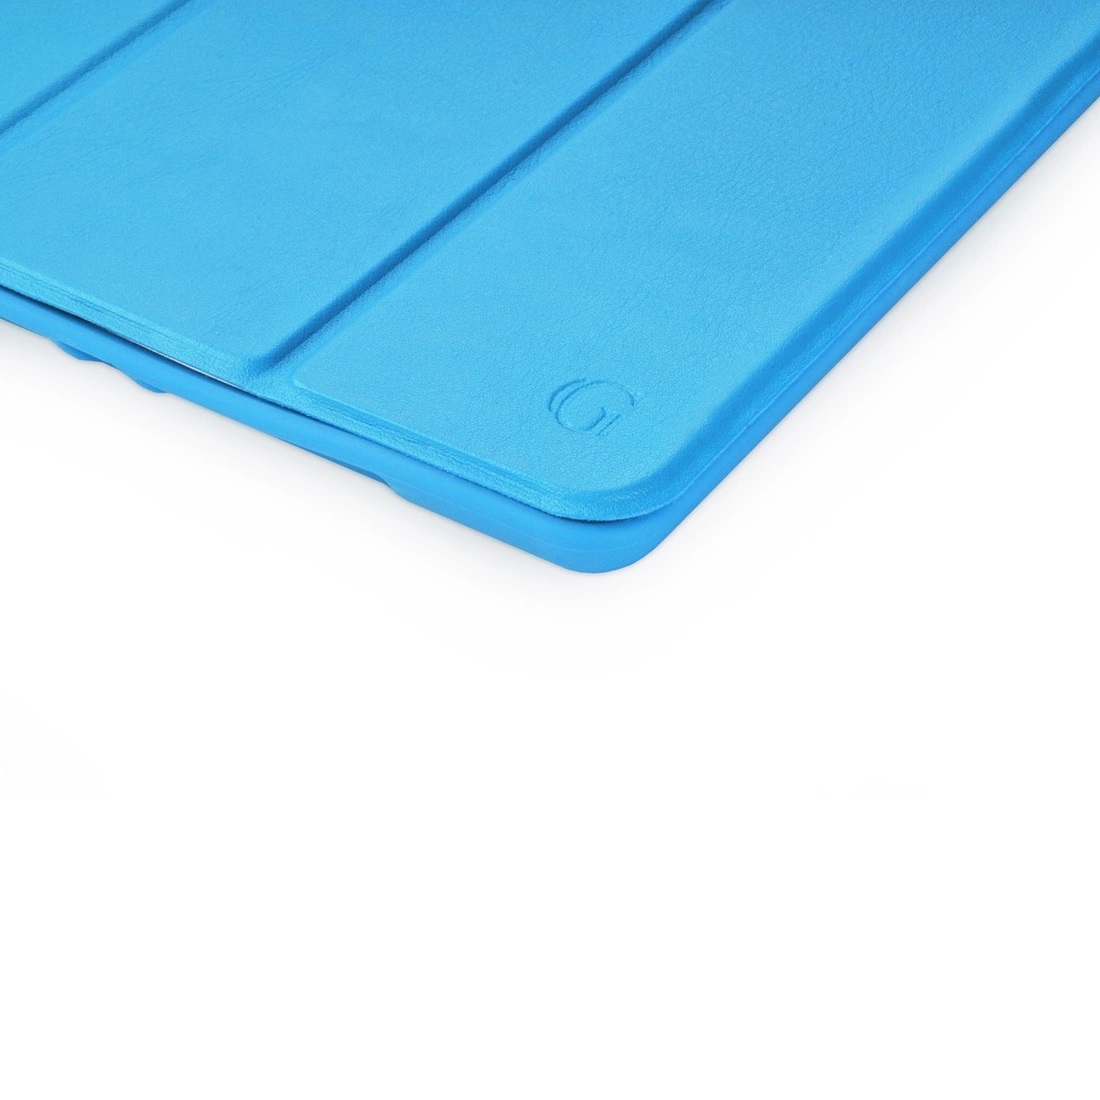 Чехол-книжка Gurdini Leather Series (pen slot) Blue для iPad Pro 10.5/iPad Air (2019)